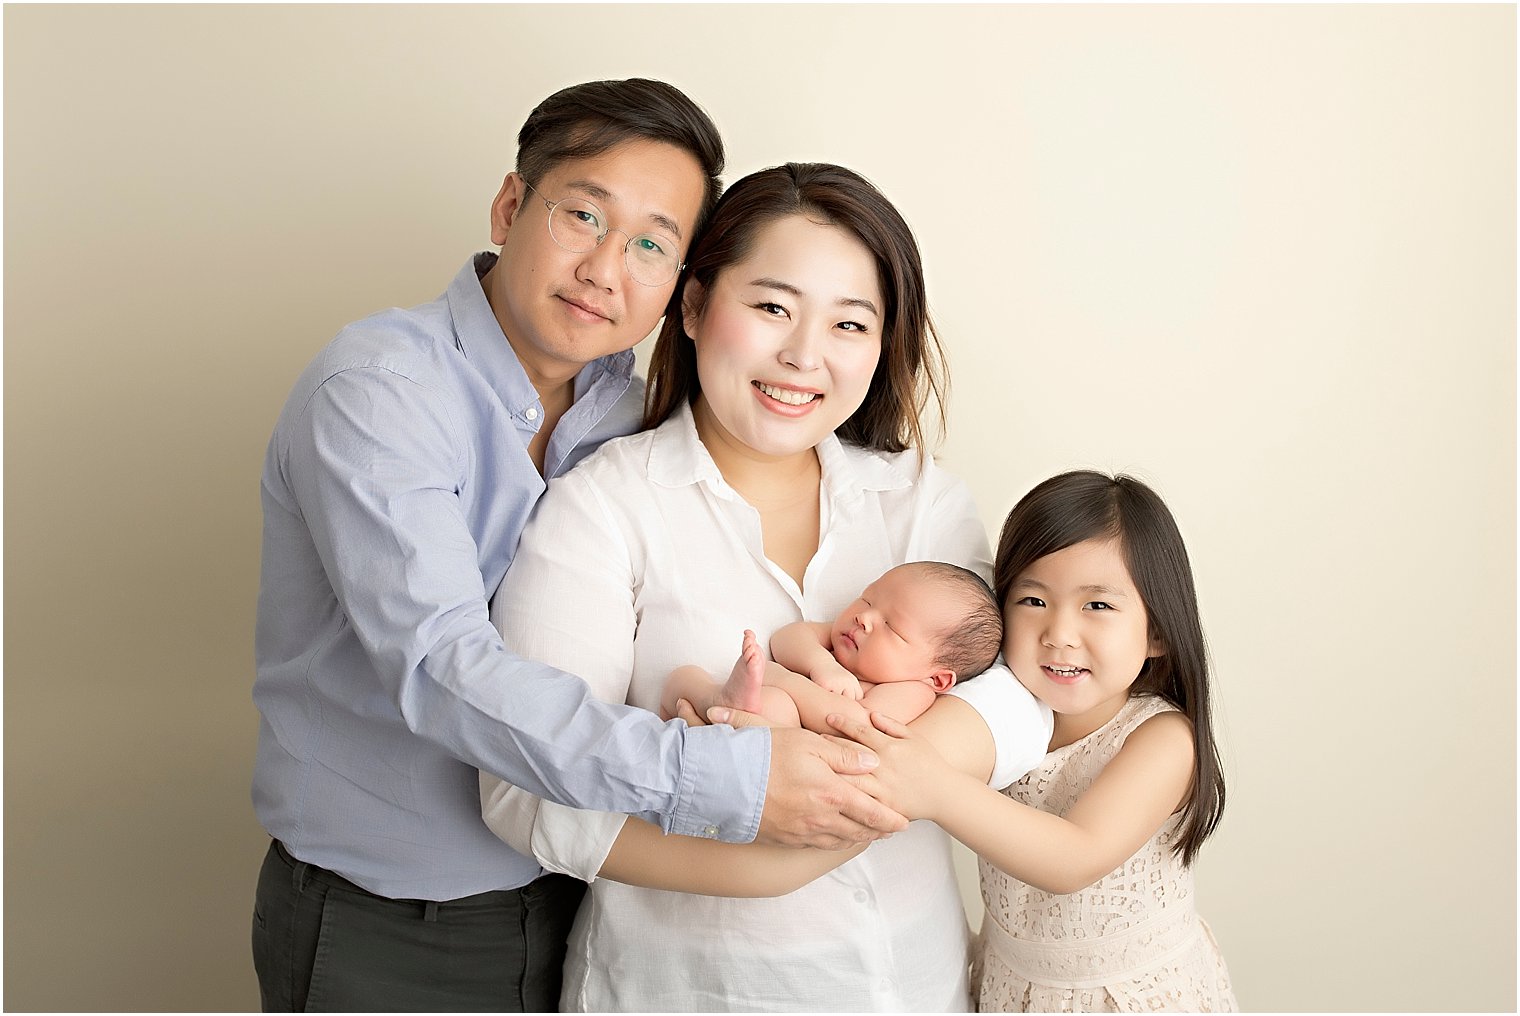 Family photo with newborn baby